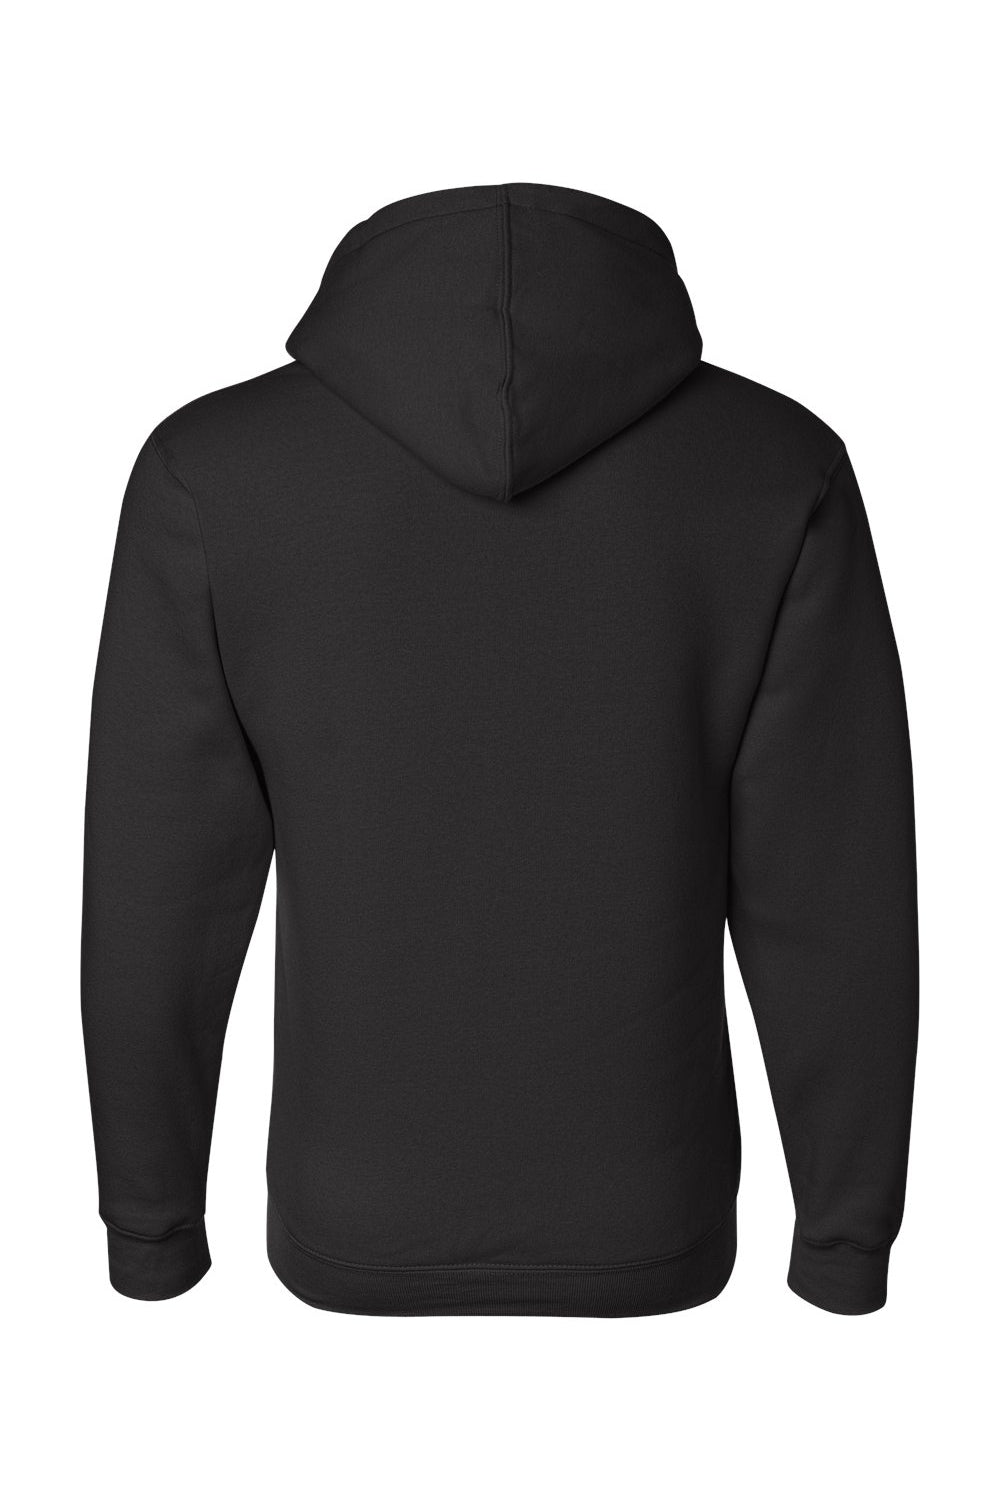 Bayside BA900 Mens USA Made Full Zip Hooded Sweatshirt Hoodie Black Flat Back